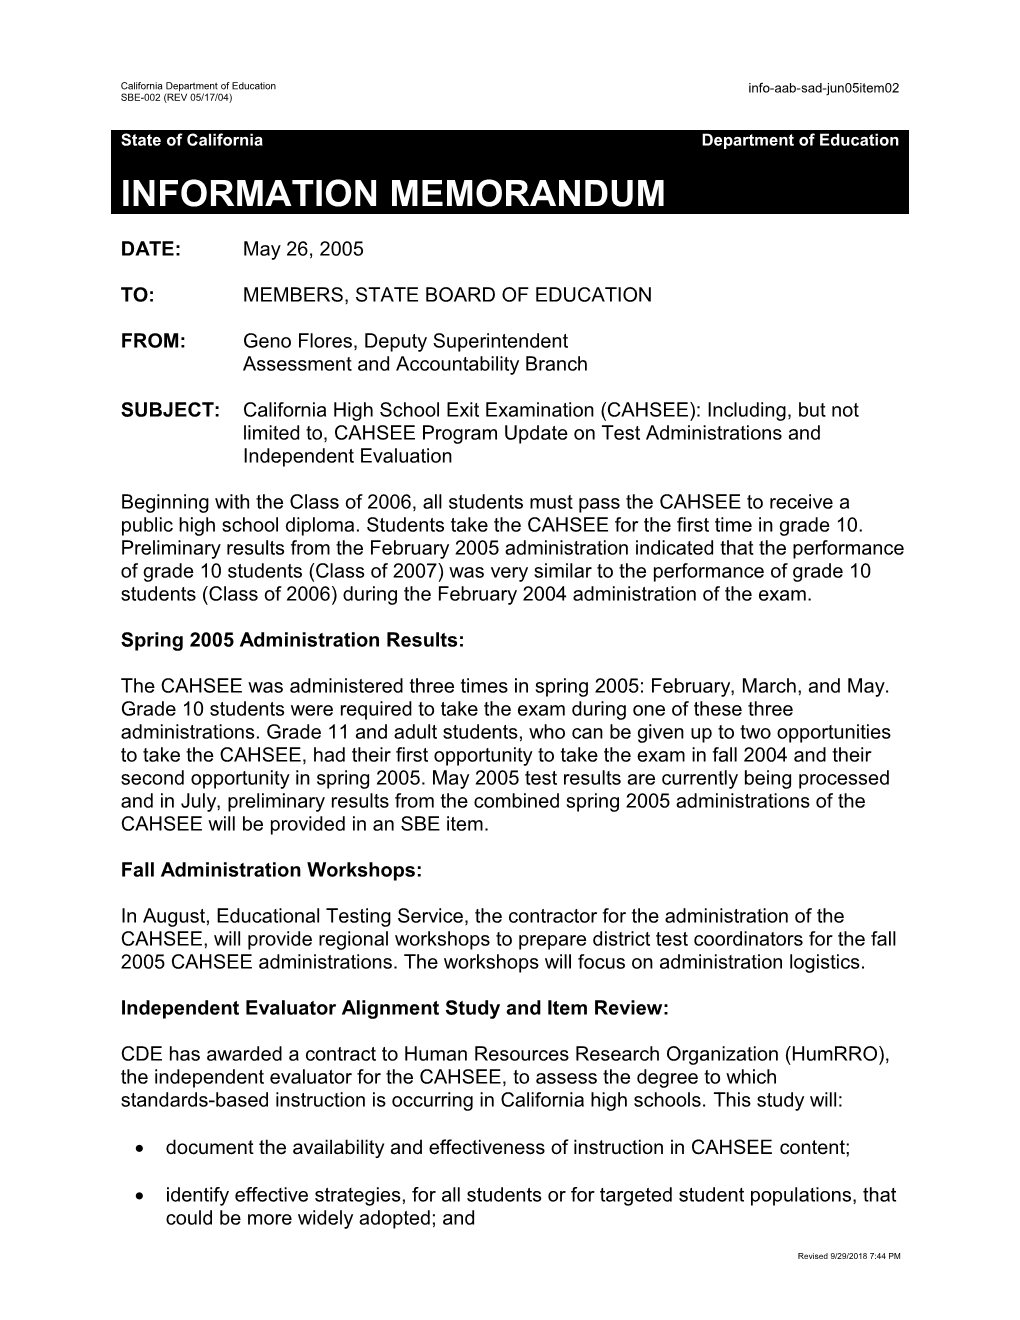 June 2005 AAB-SAD Item 02 - Information Memorandum (CA State Board of Education)